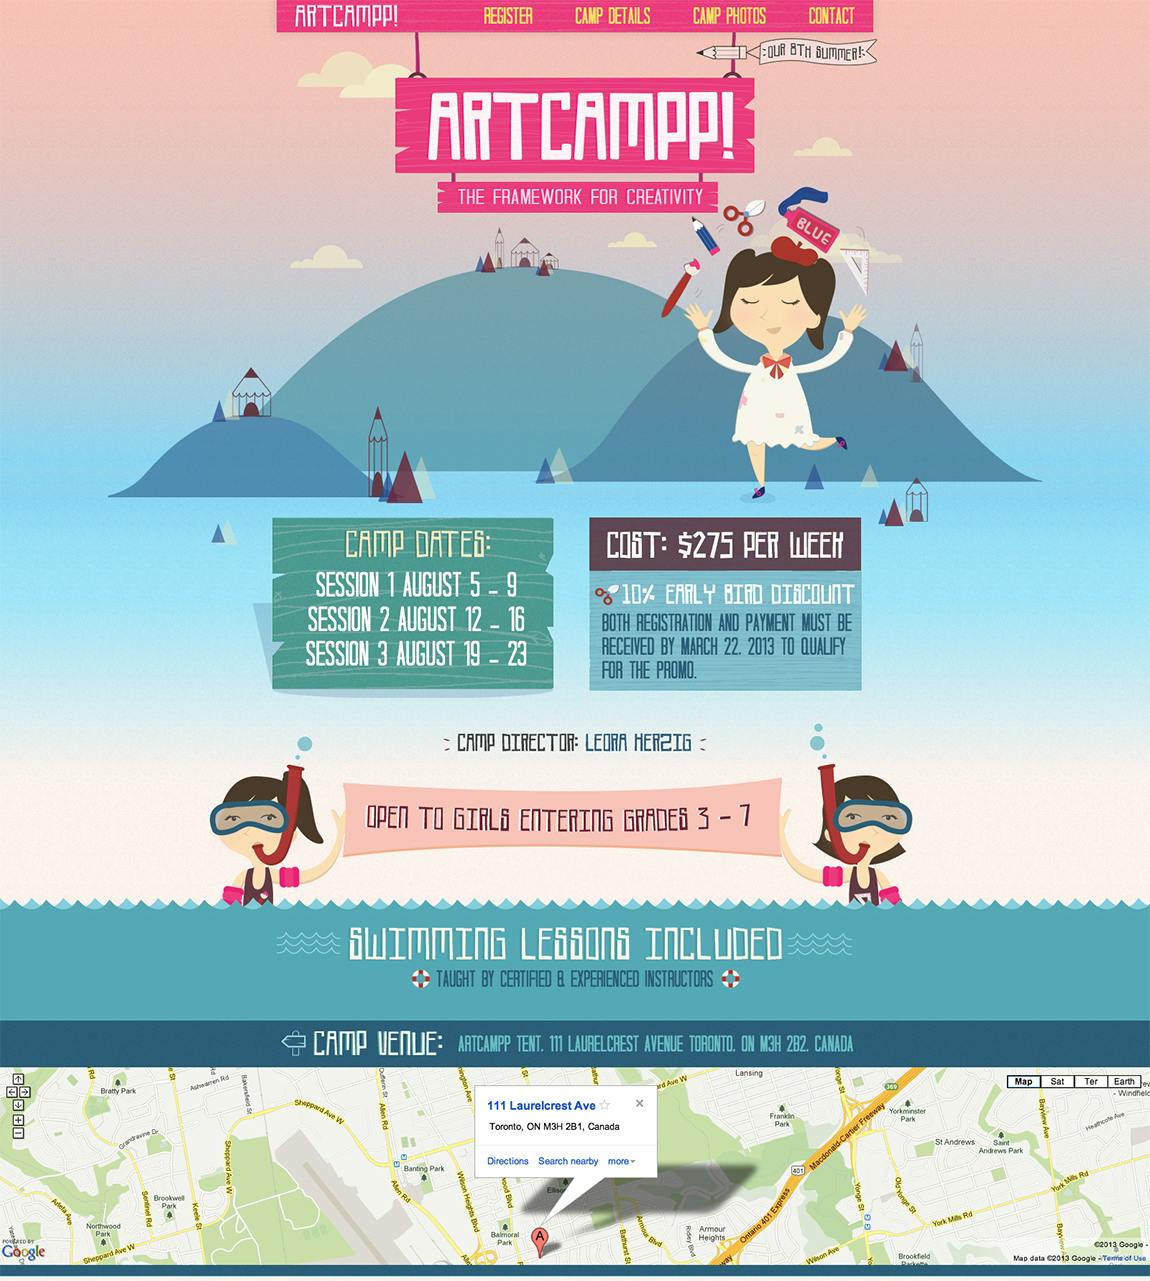 Artcampp 2013 Website Screenshot